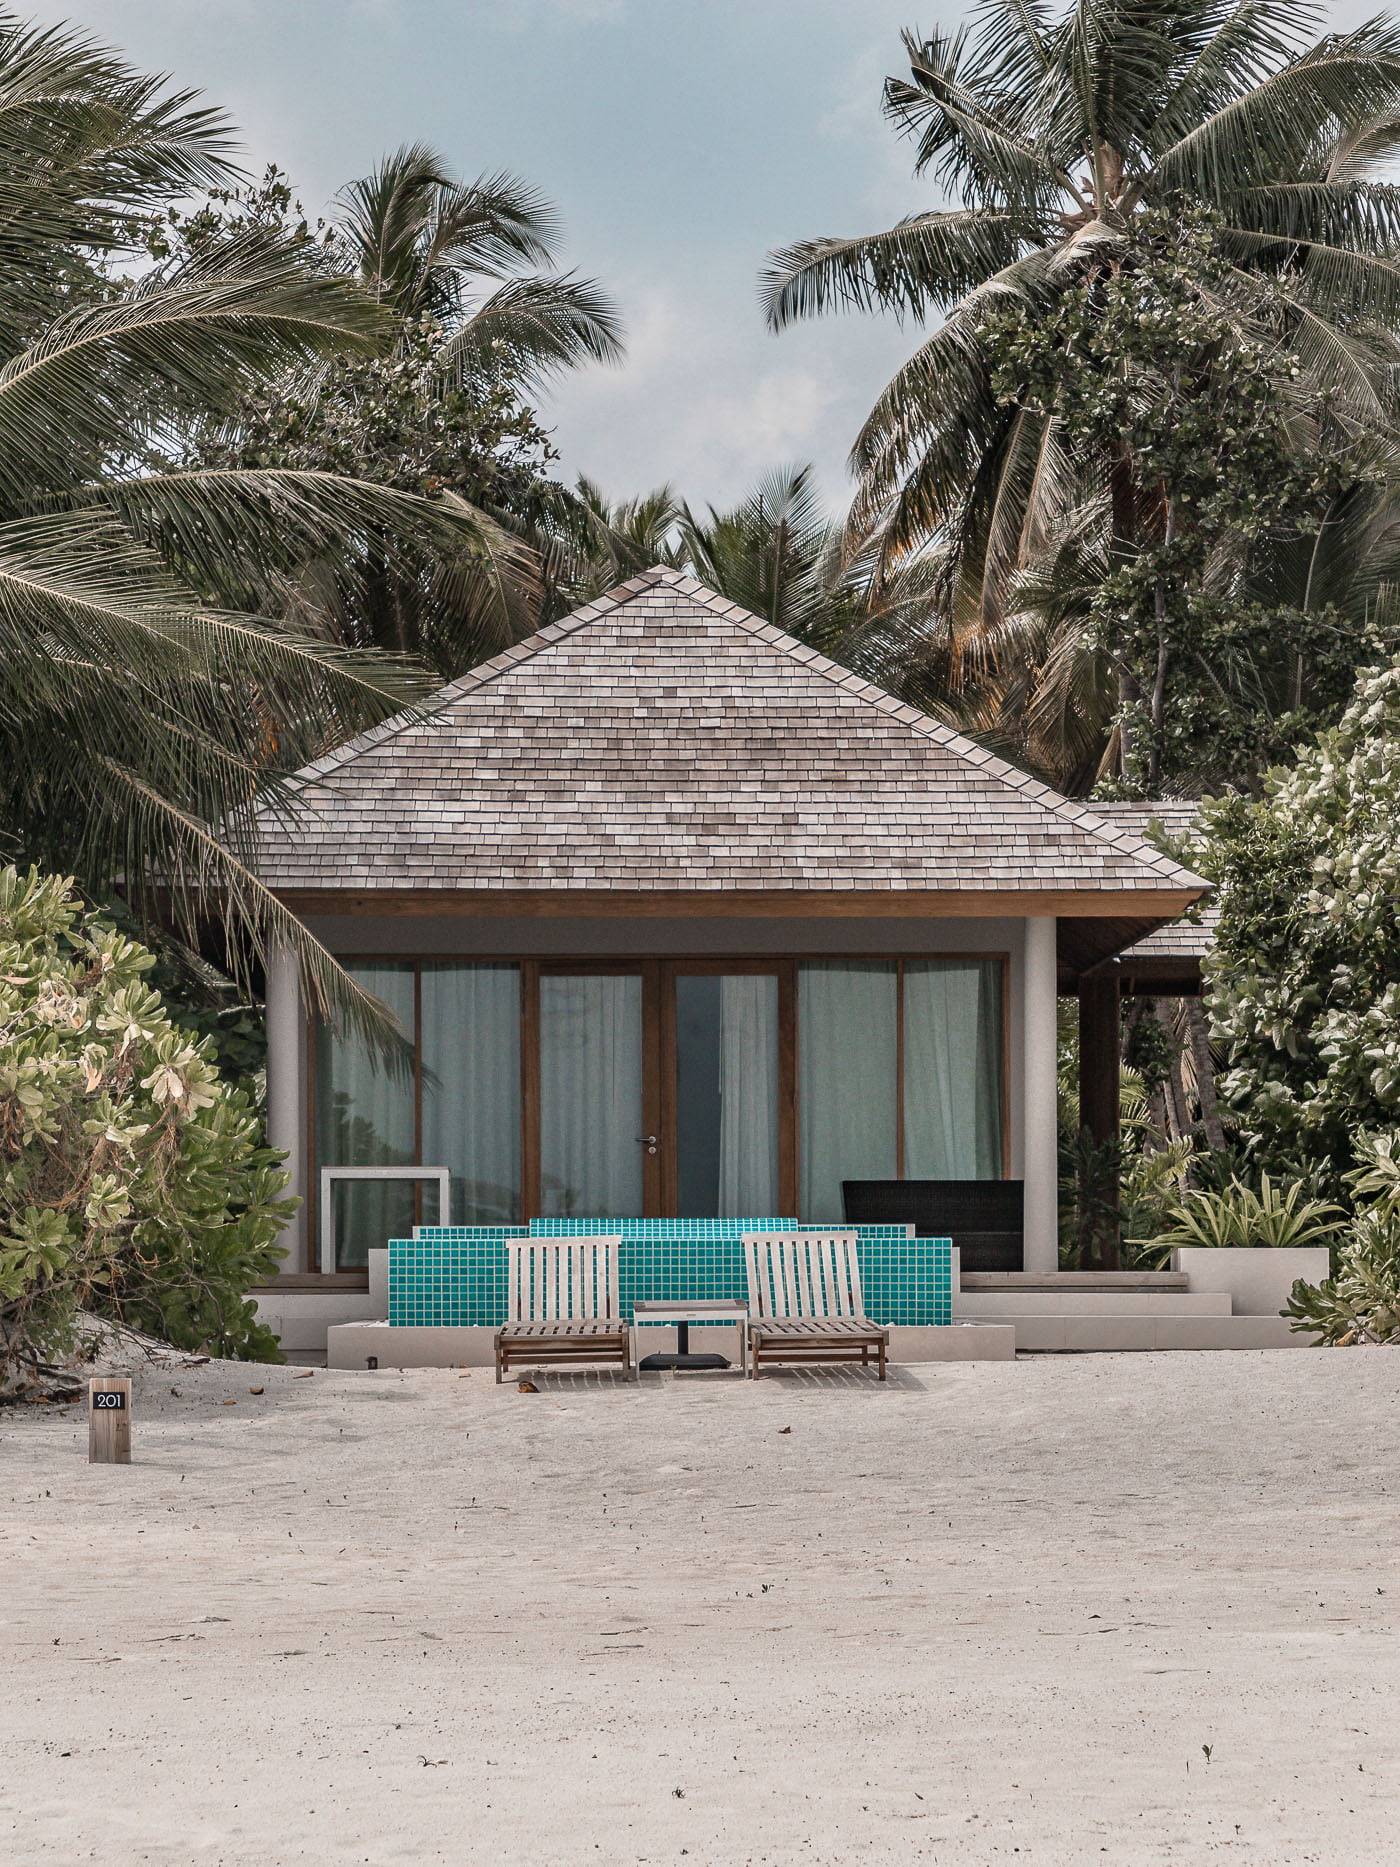 Dream Vacation - Staying At Faarufushi Maldives, Honeymoon Romantic Luxury Resort For Couples | חופשה חלומית - ל Faarufushi Maldives, אתר נופש רומנטי לירח דבש לזוגות